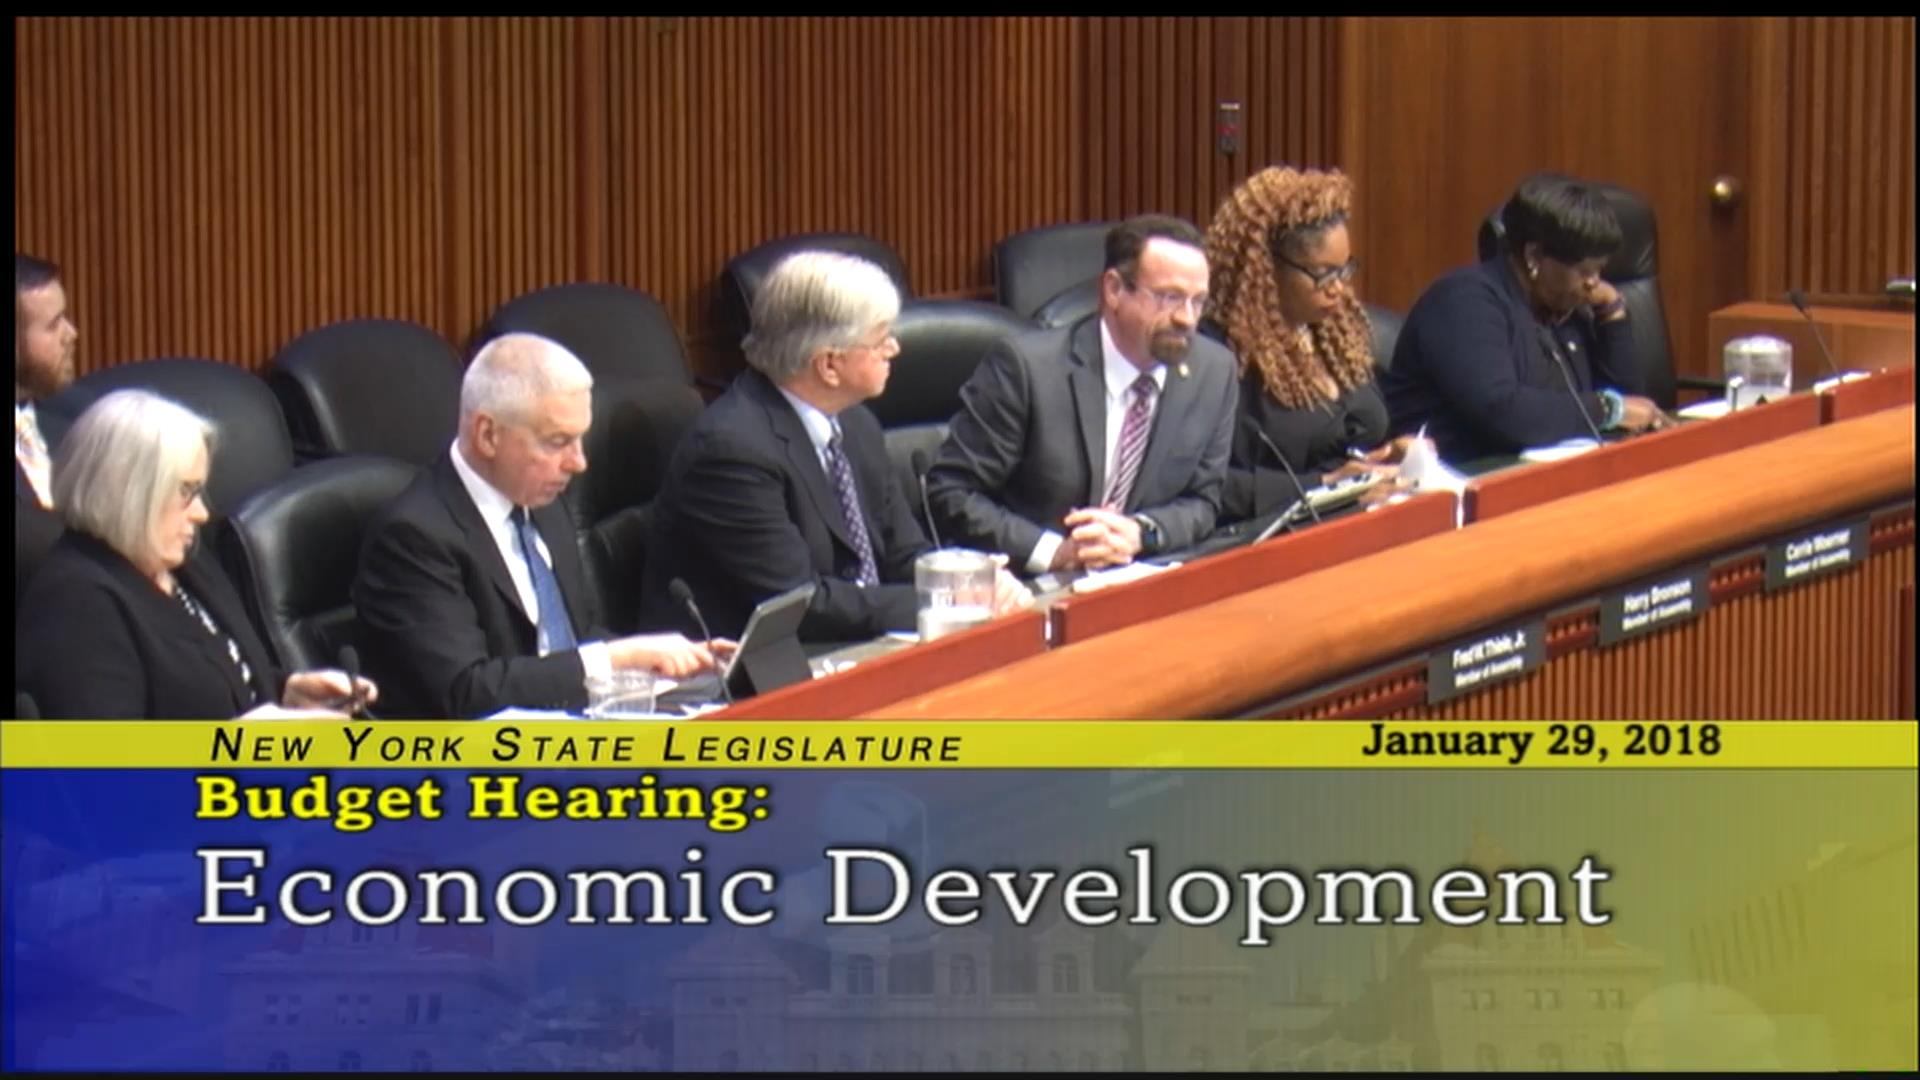 Budget Hearing on Economic Development